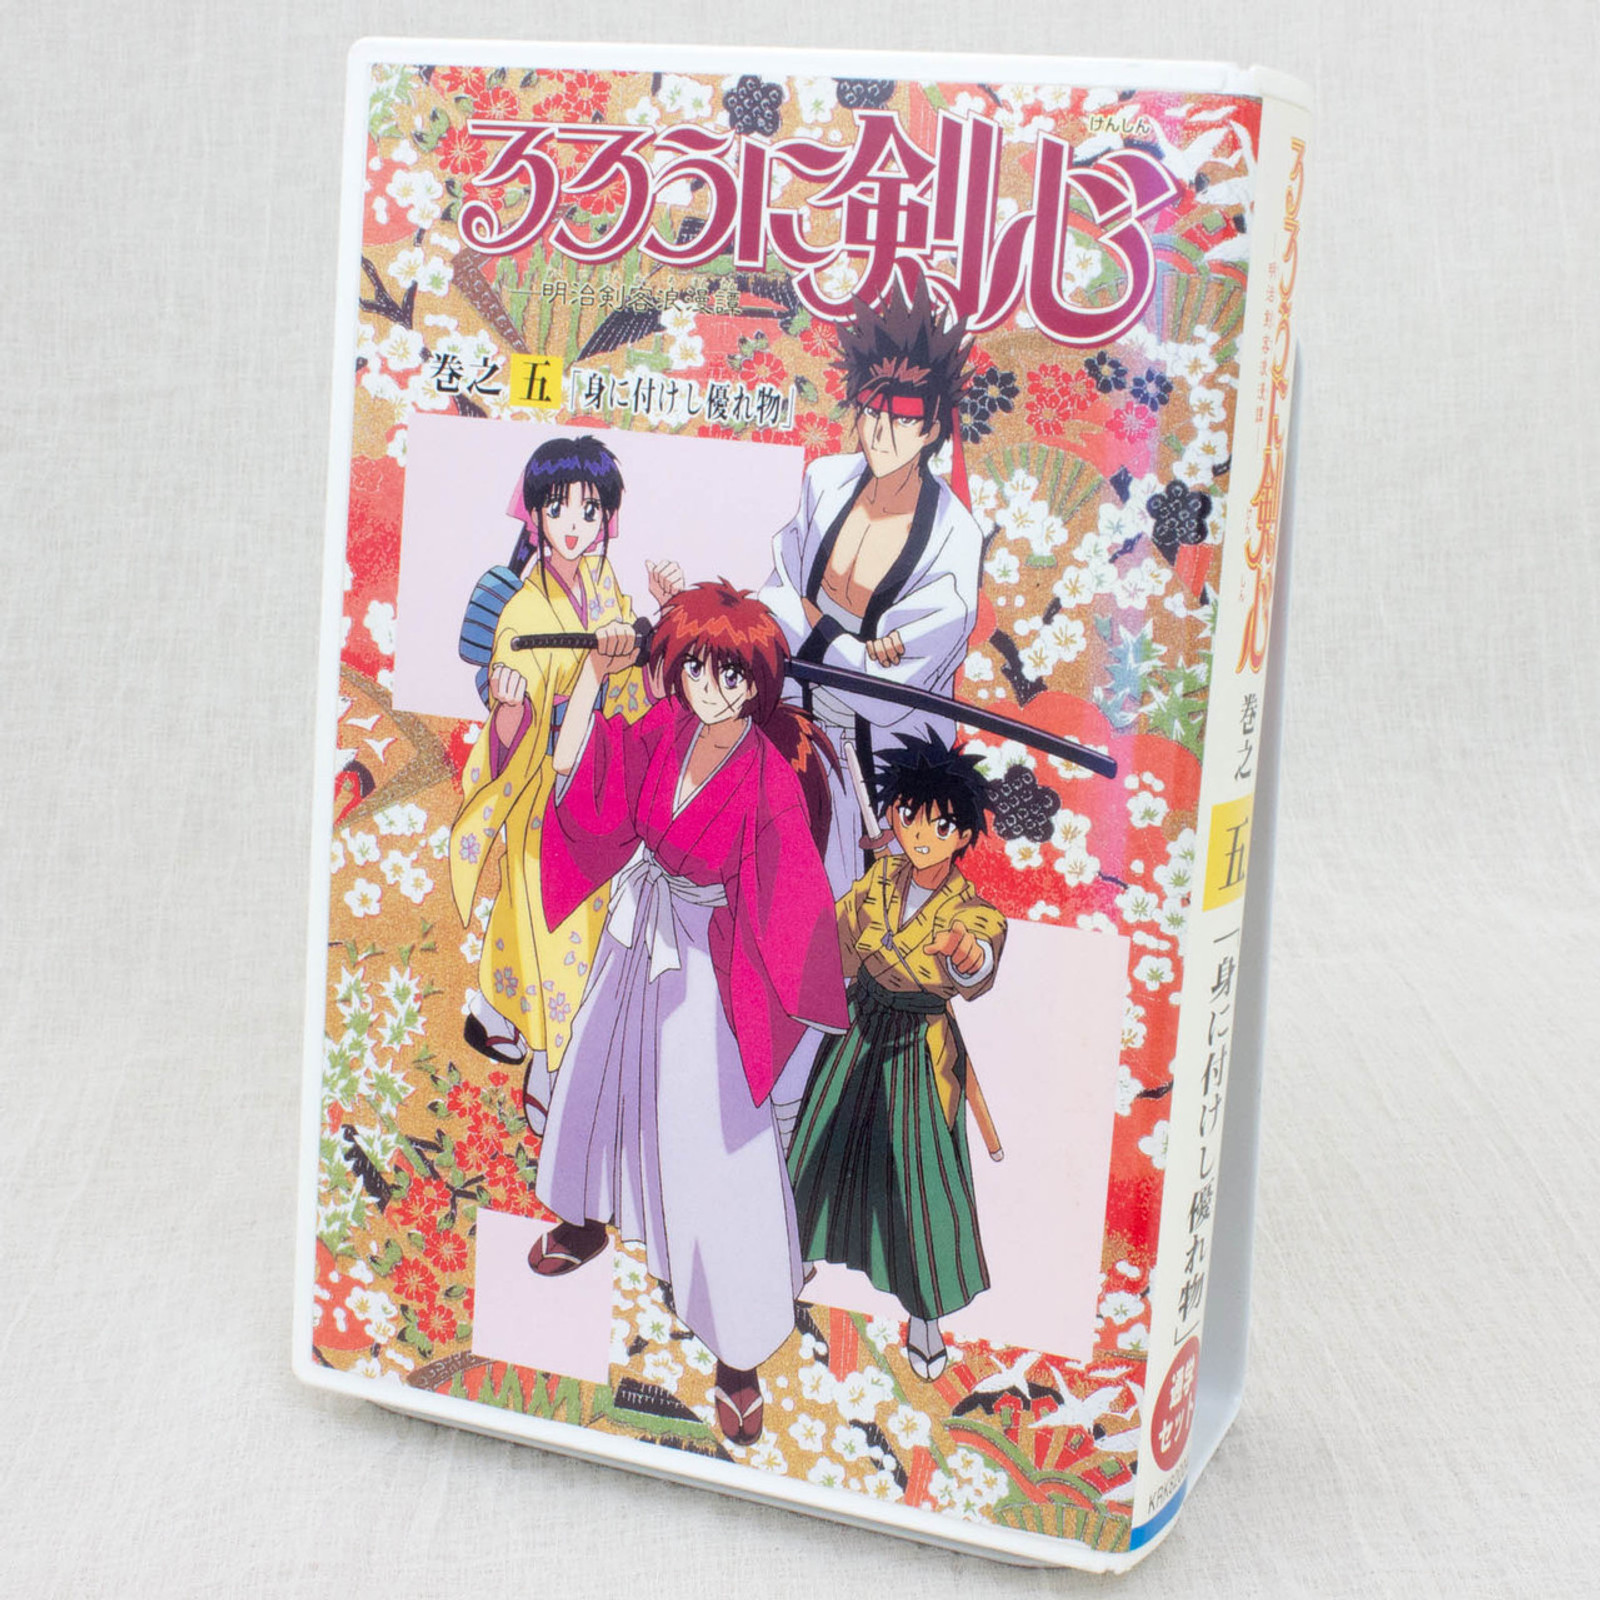 Rurouni Kenshin Stationery Goods Set Card Holder Handkerchief Pins JAPAN ANIME